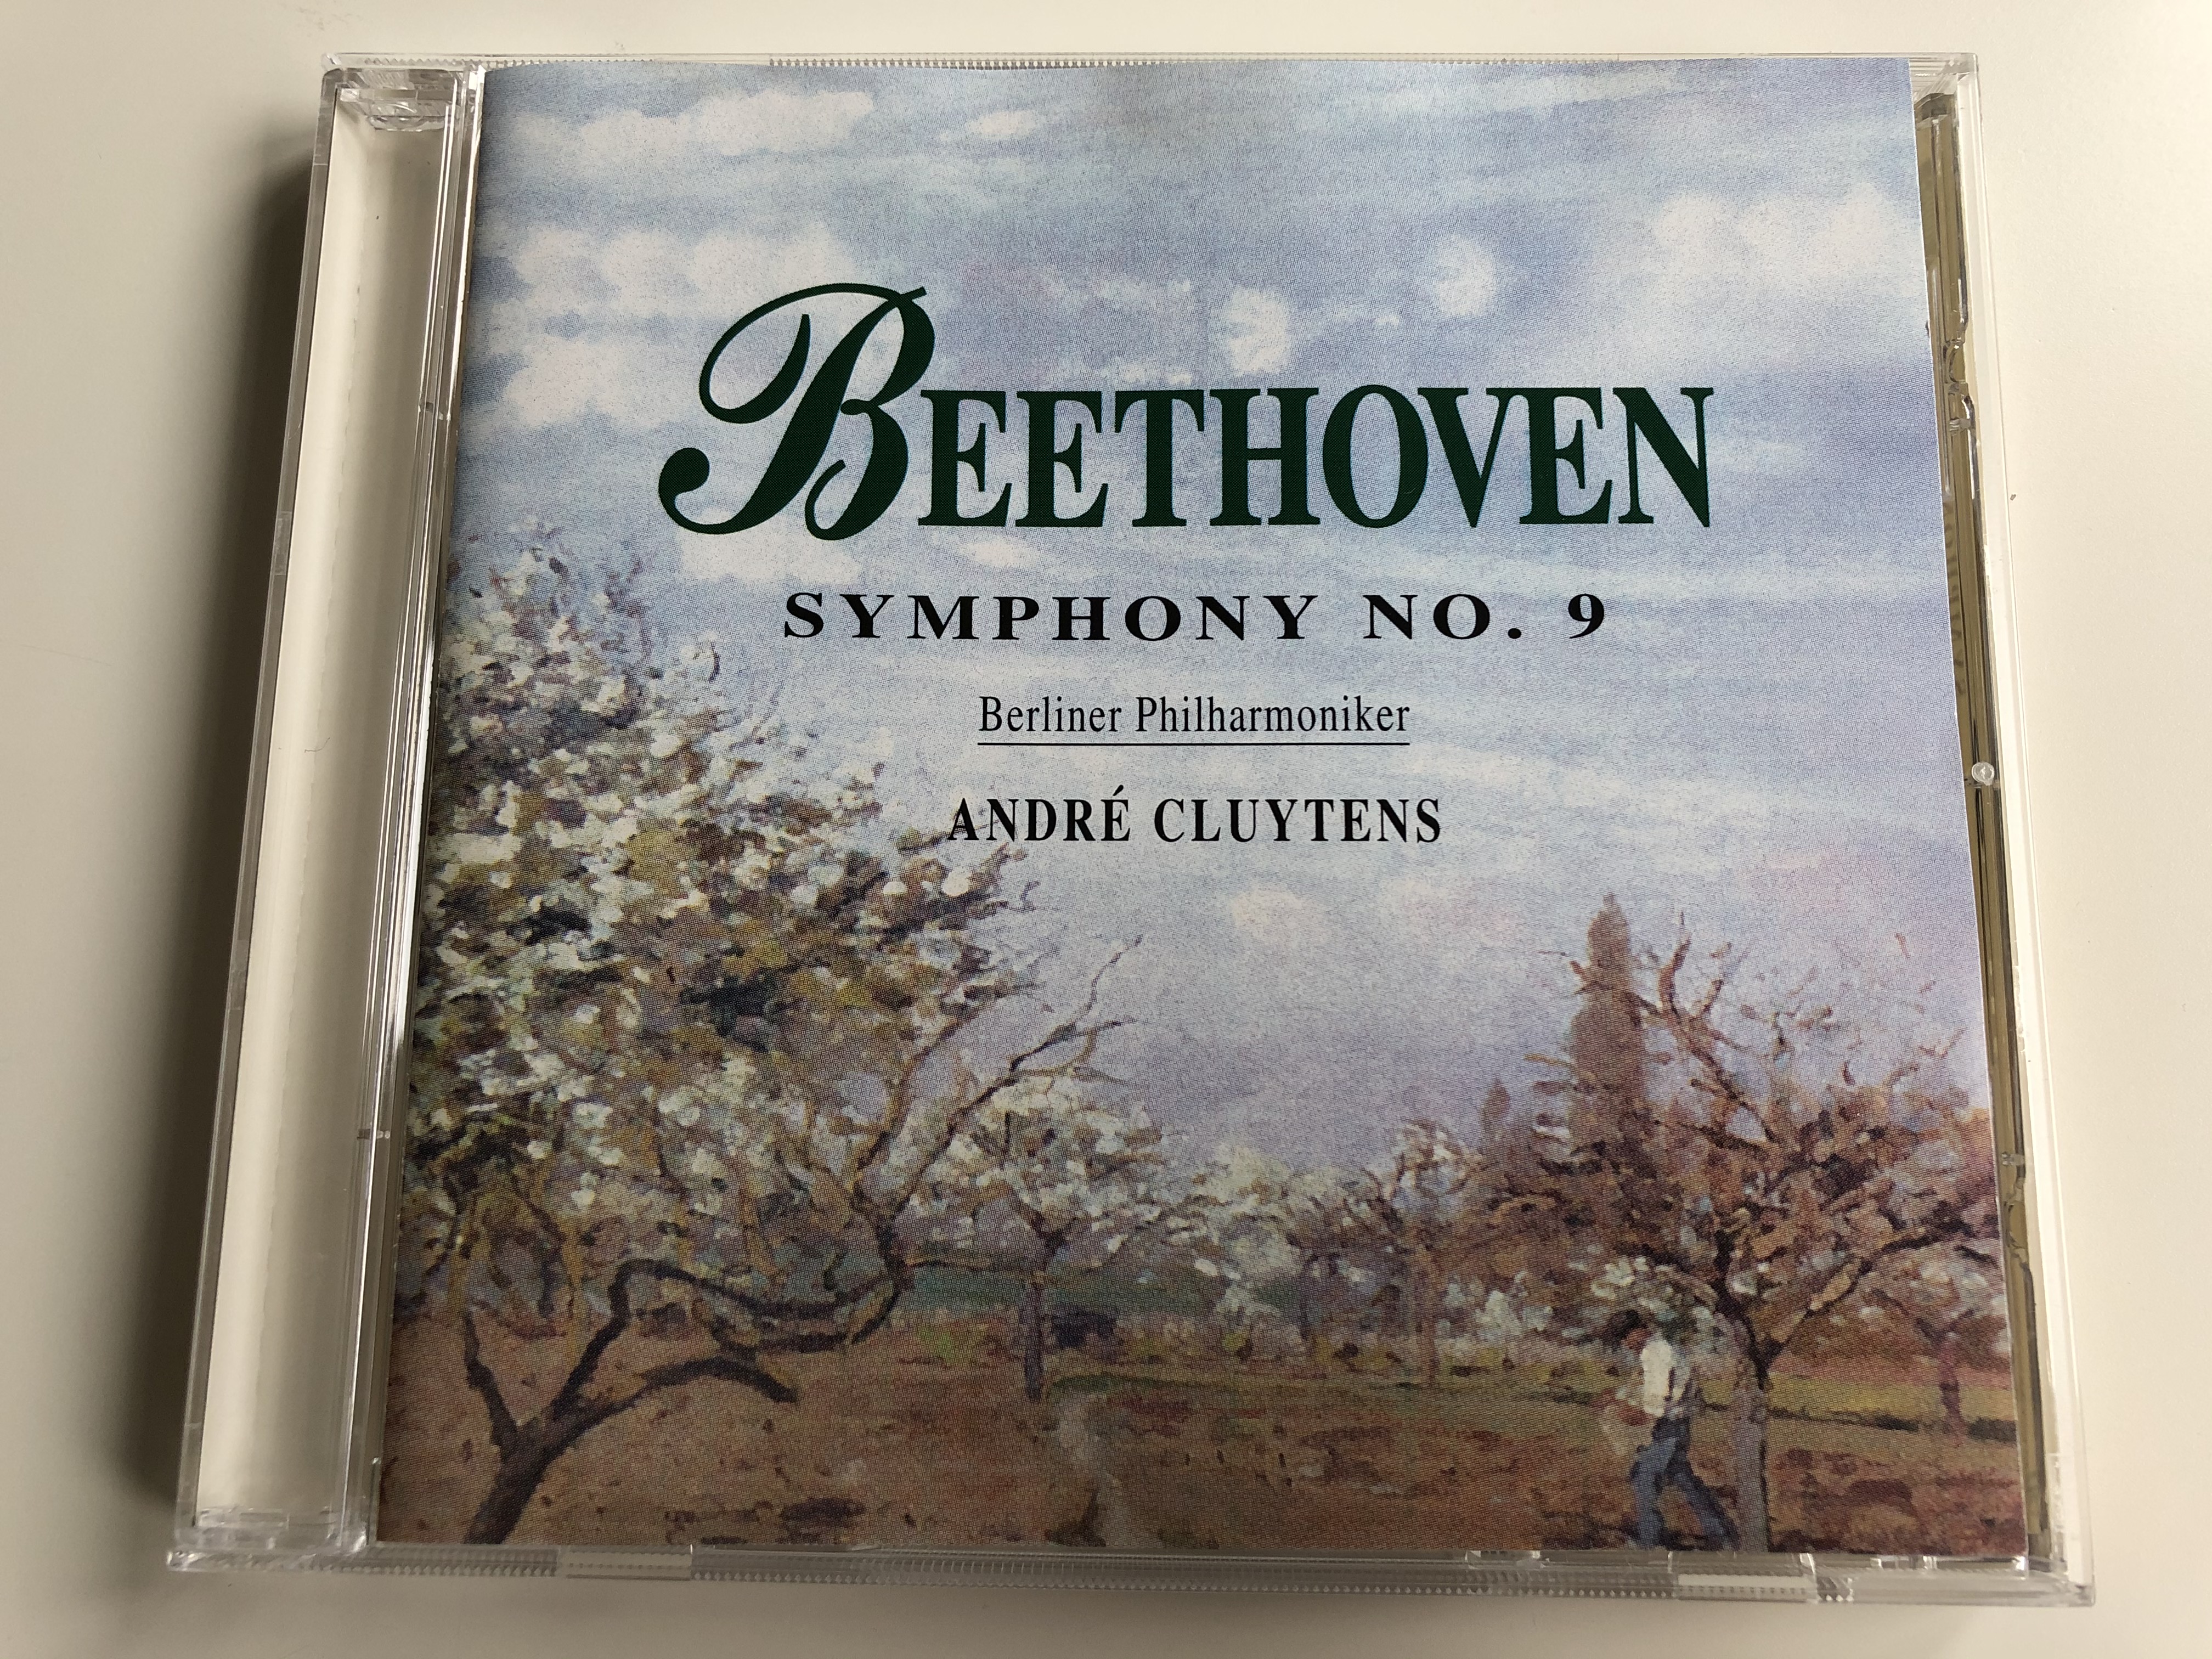 beethoven-symphony-no.-9-berliner-philharmoniker-andre-cluytens-royal-classics-audio-cd-roy-700982-1-.jpg